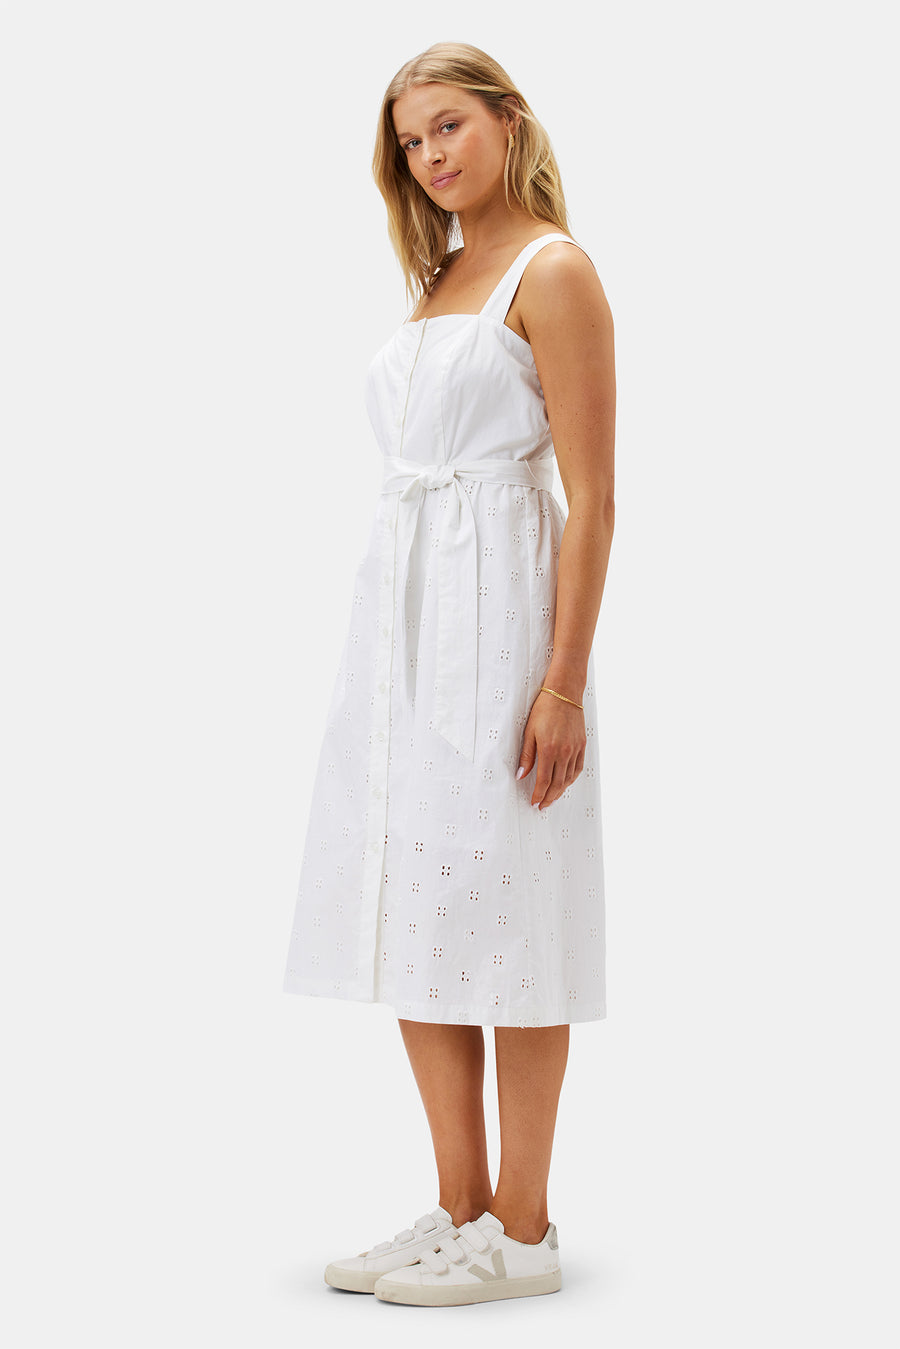 Irene Organic Cotton Eyelet Dress - White